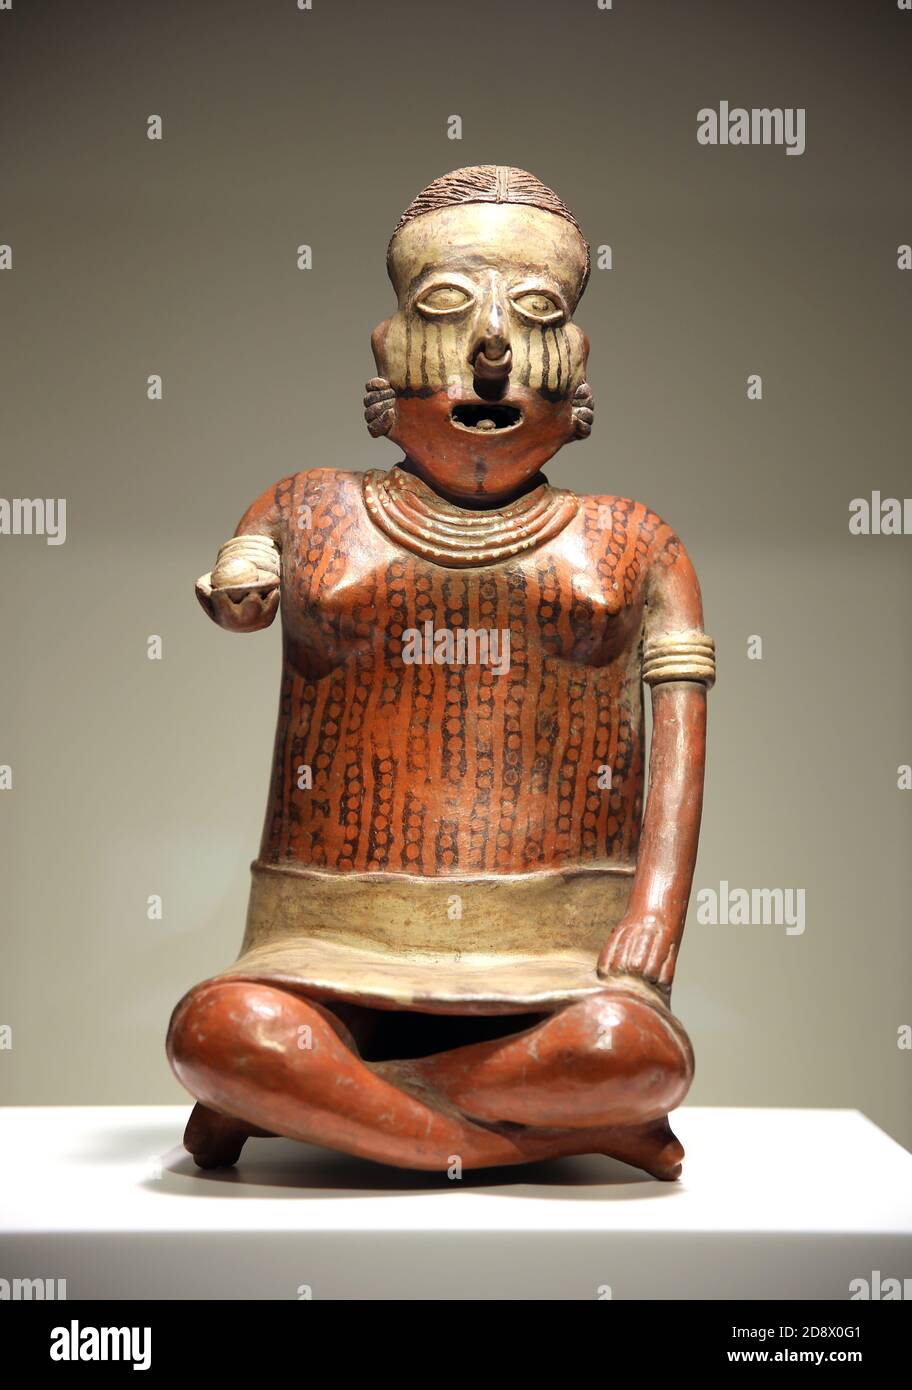 Sitzende Figur. Nayarit, Mexiko. (100 v. Chr.-300 n. Chr.) Bemalte Keramik. Meso - Amerika. Museum der Kulturen der Welt Barcelona, Katalonien, Spanien. Stockfoto